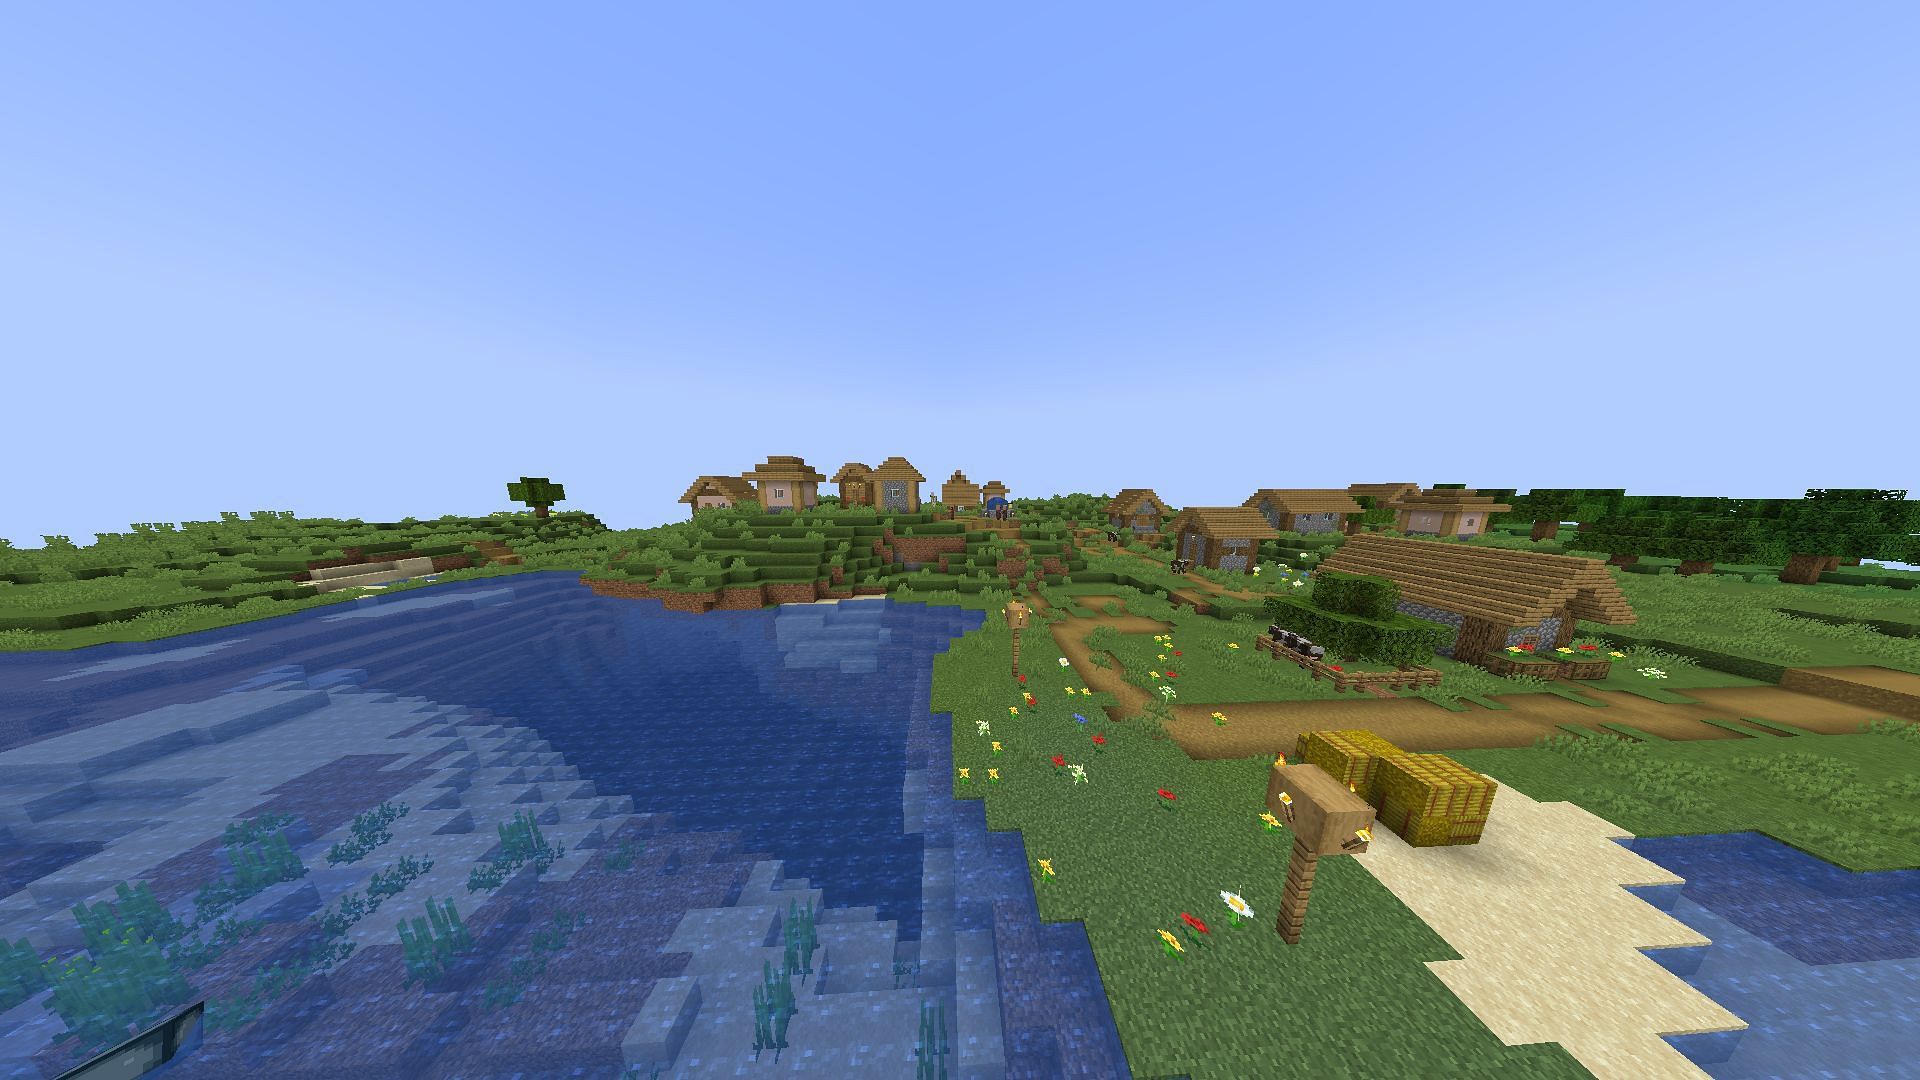 A village near a lake (Image via Minecraft)